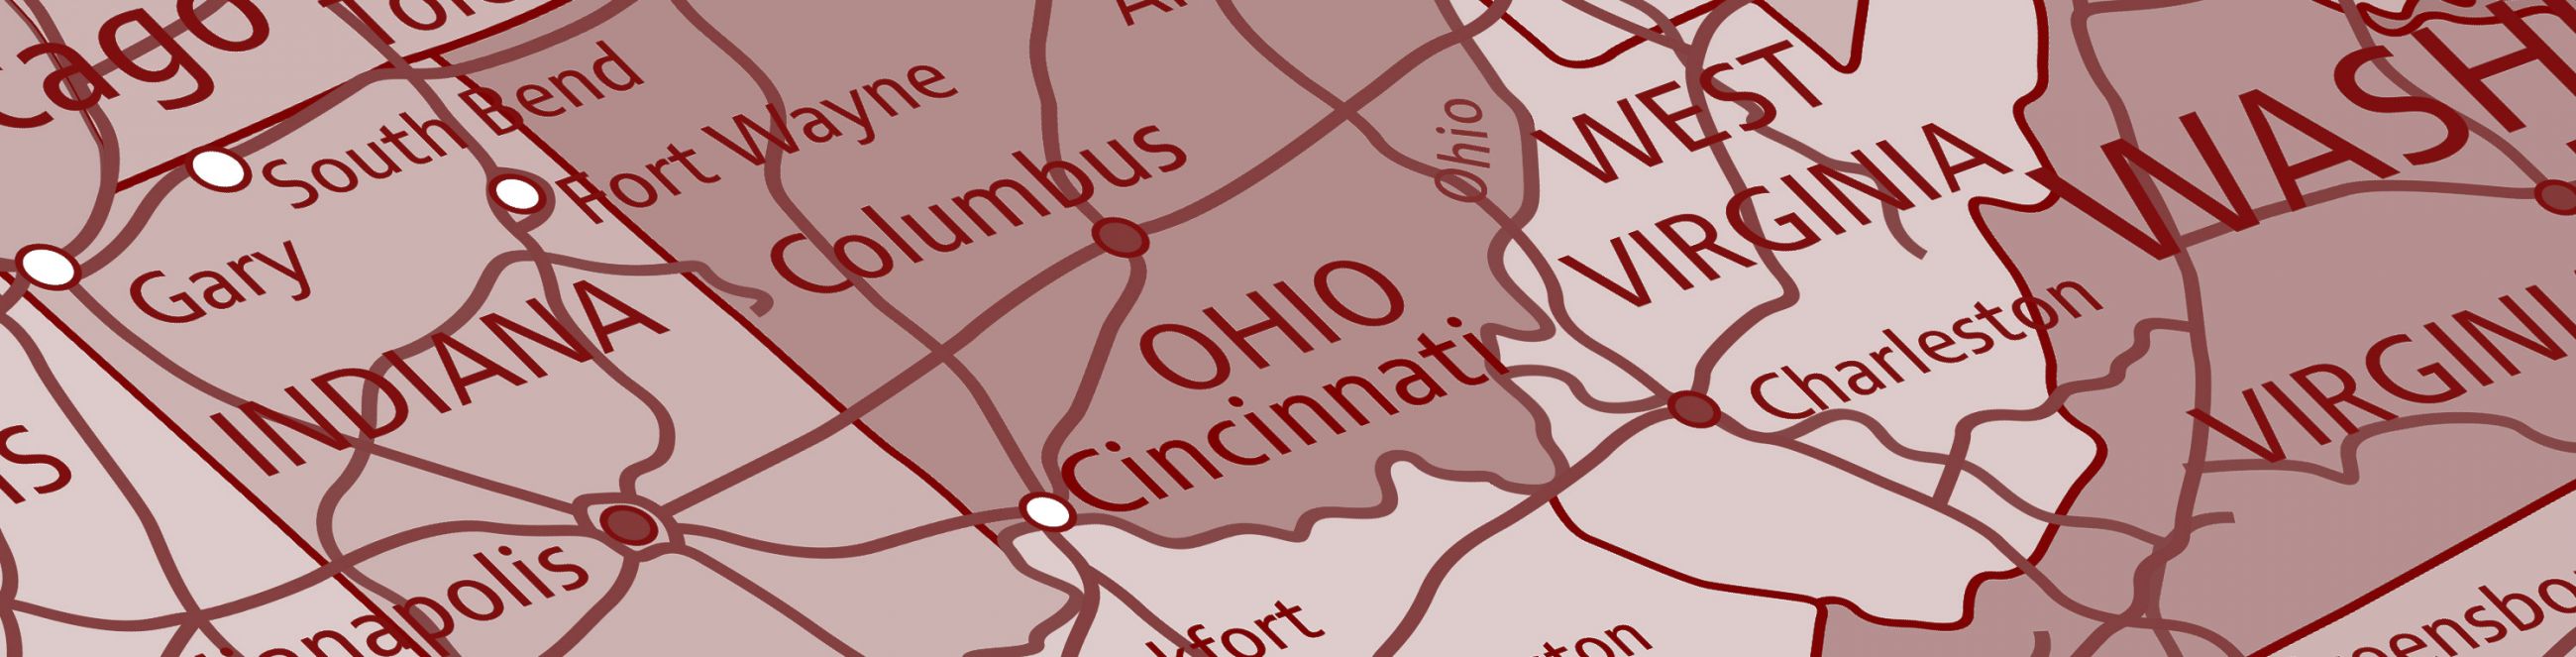 Delta 8 Ohio Facts & Is Delta 8 Legal In Ohio?